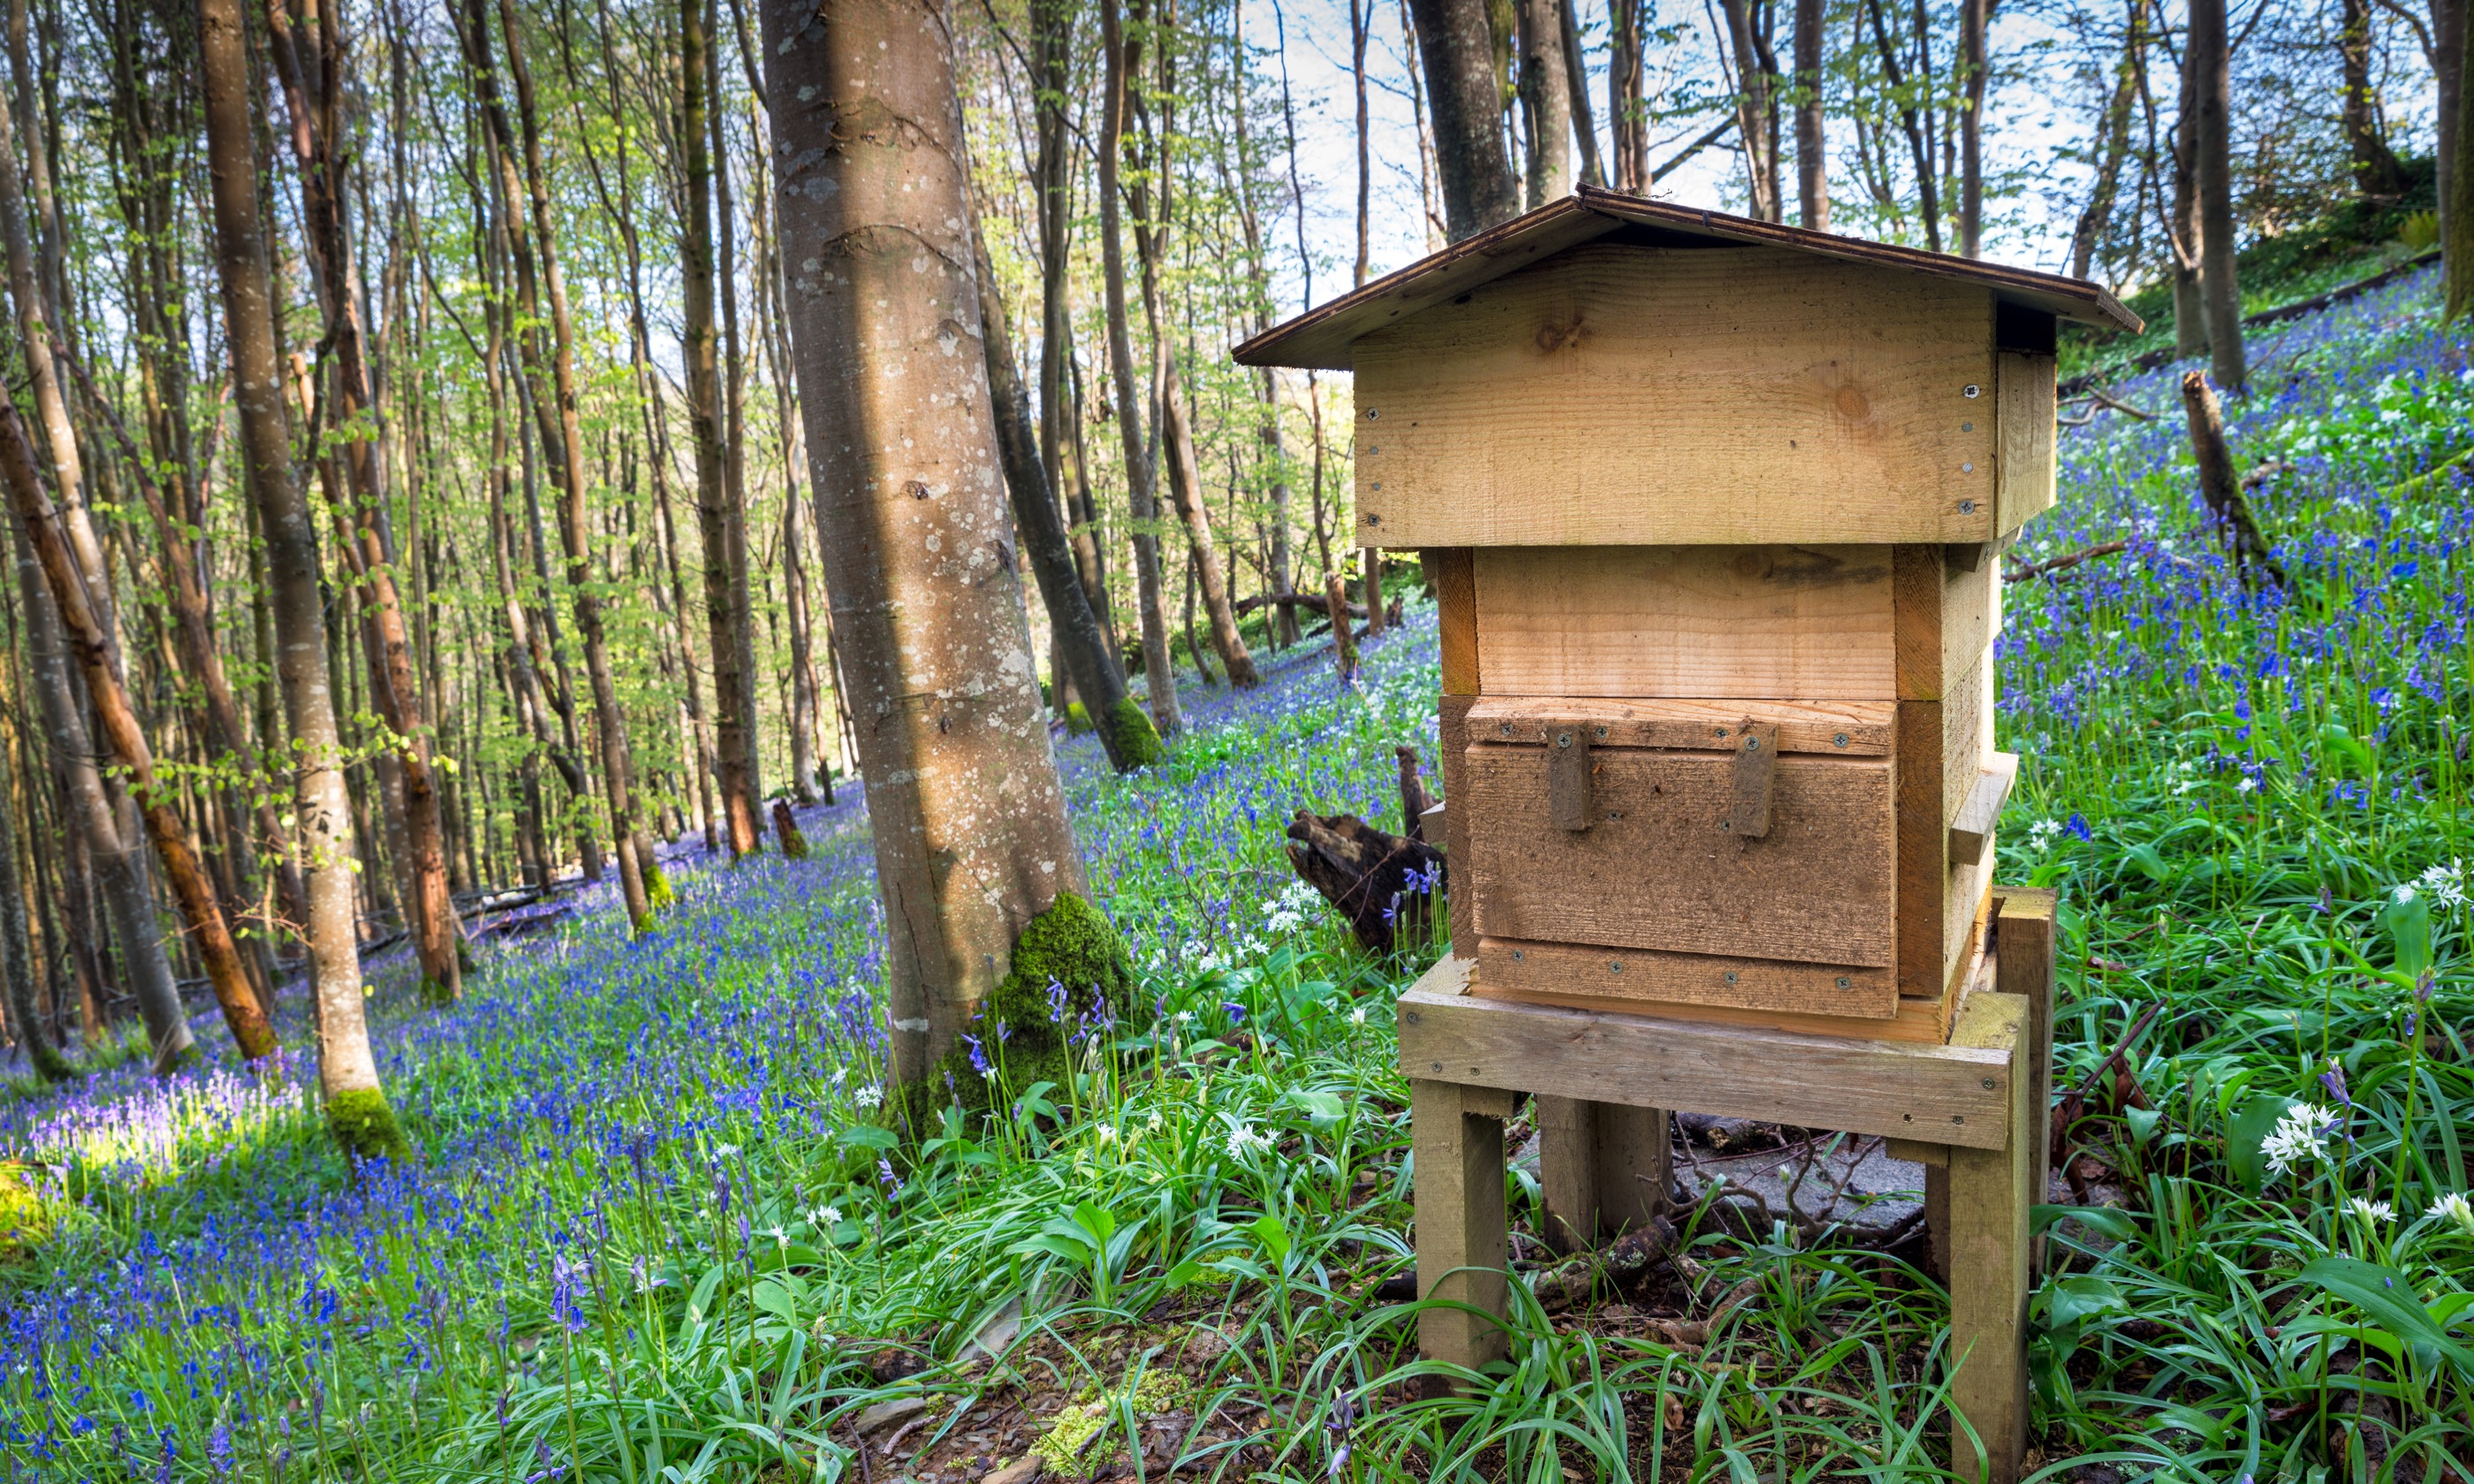 Beehive in Cornwall (Shutterstock.com)